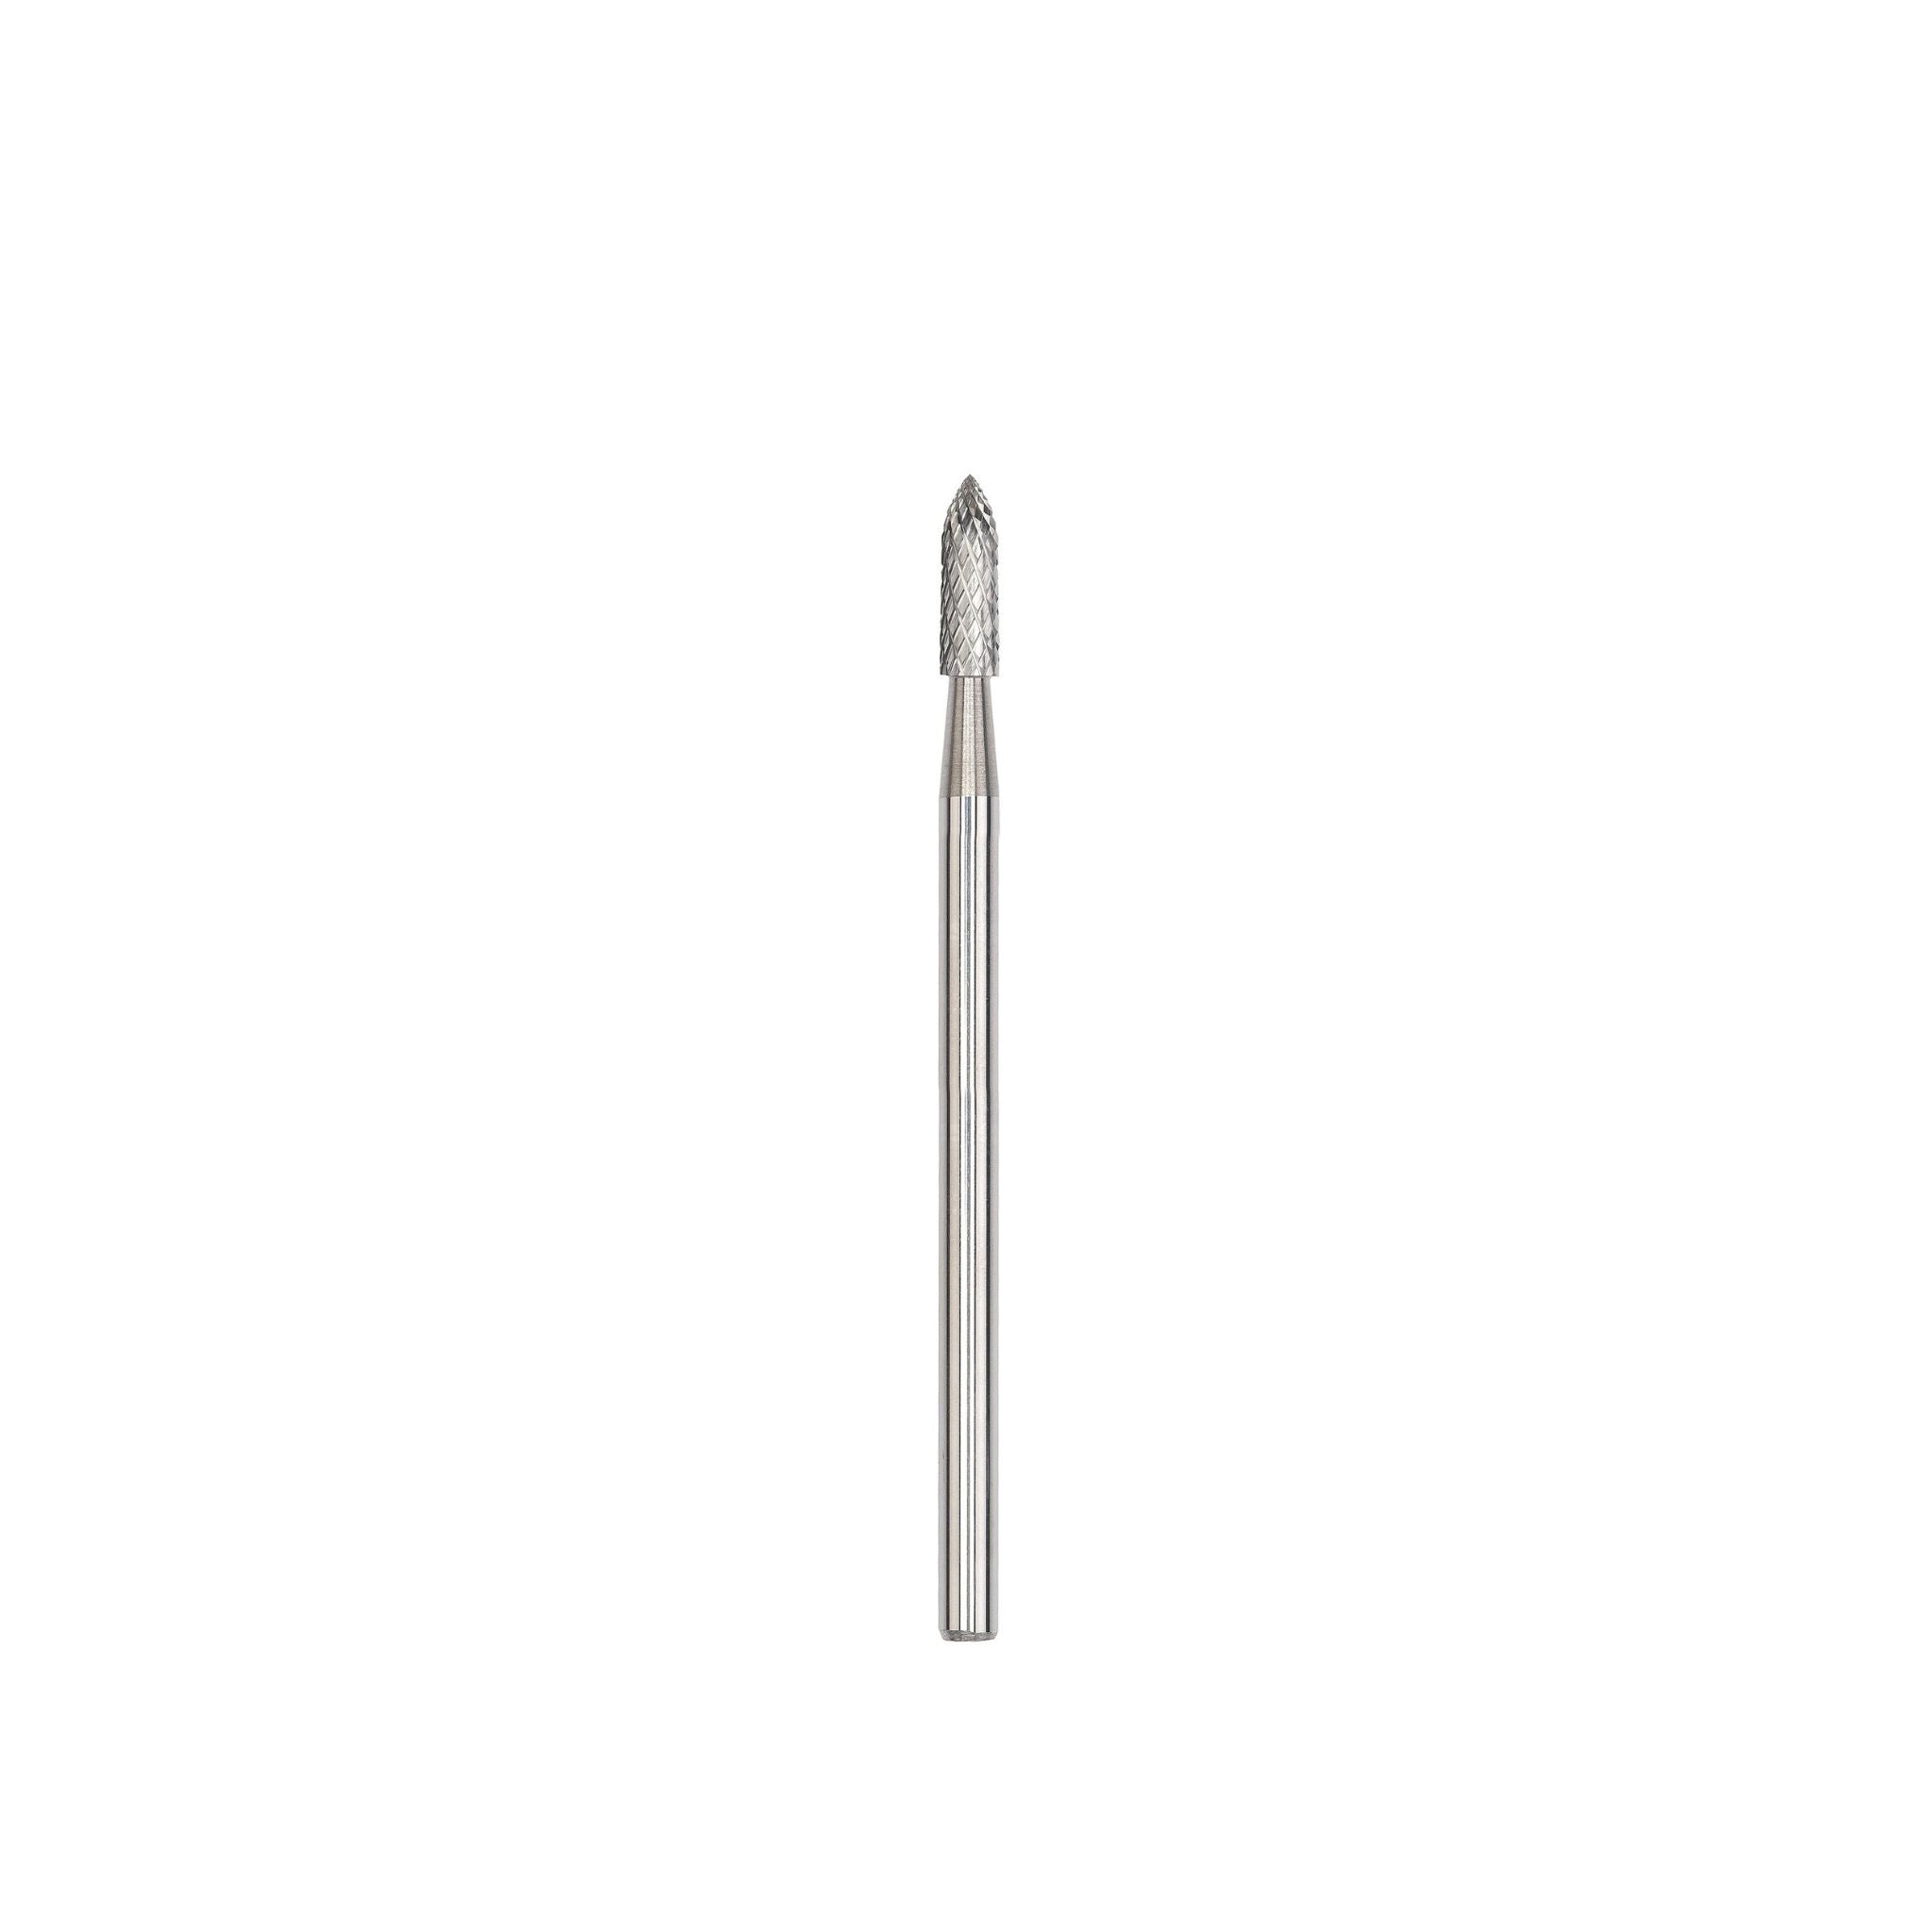 Diadur carbide cutter small flame<br> ISO Fig No. 289